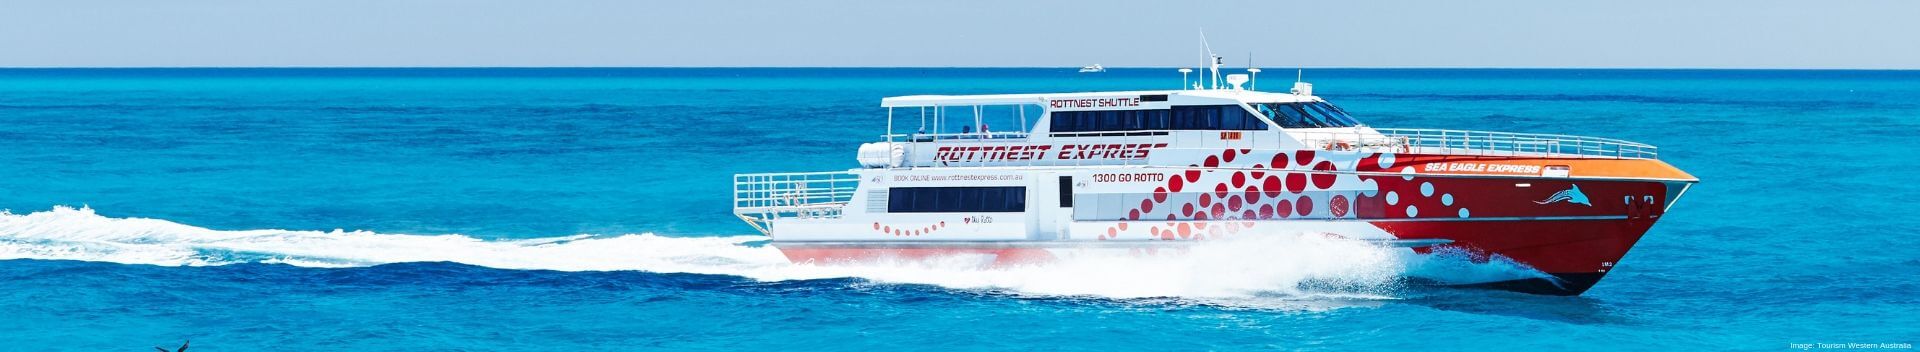 Rottnest Express Cruise